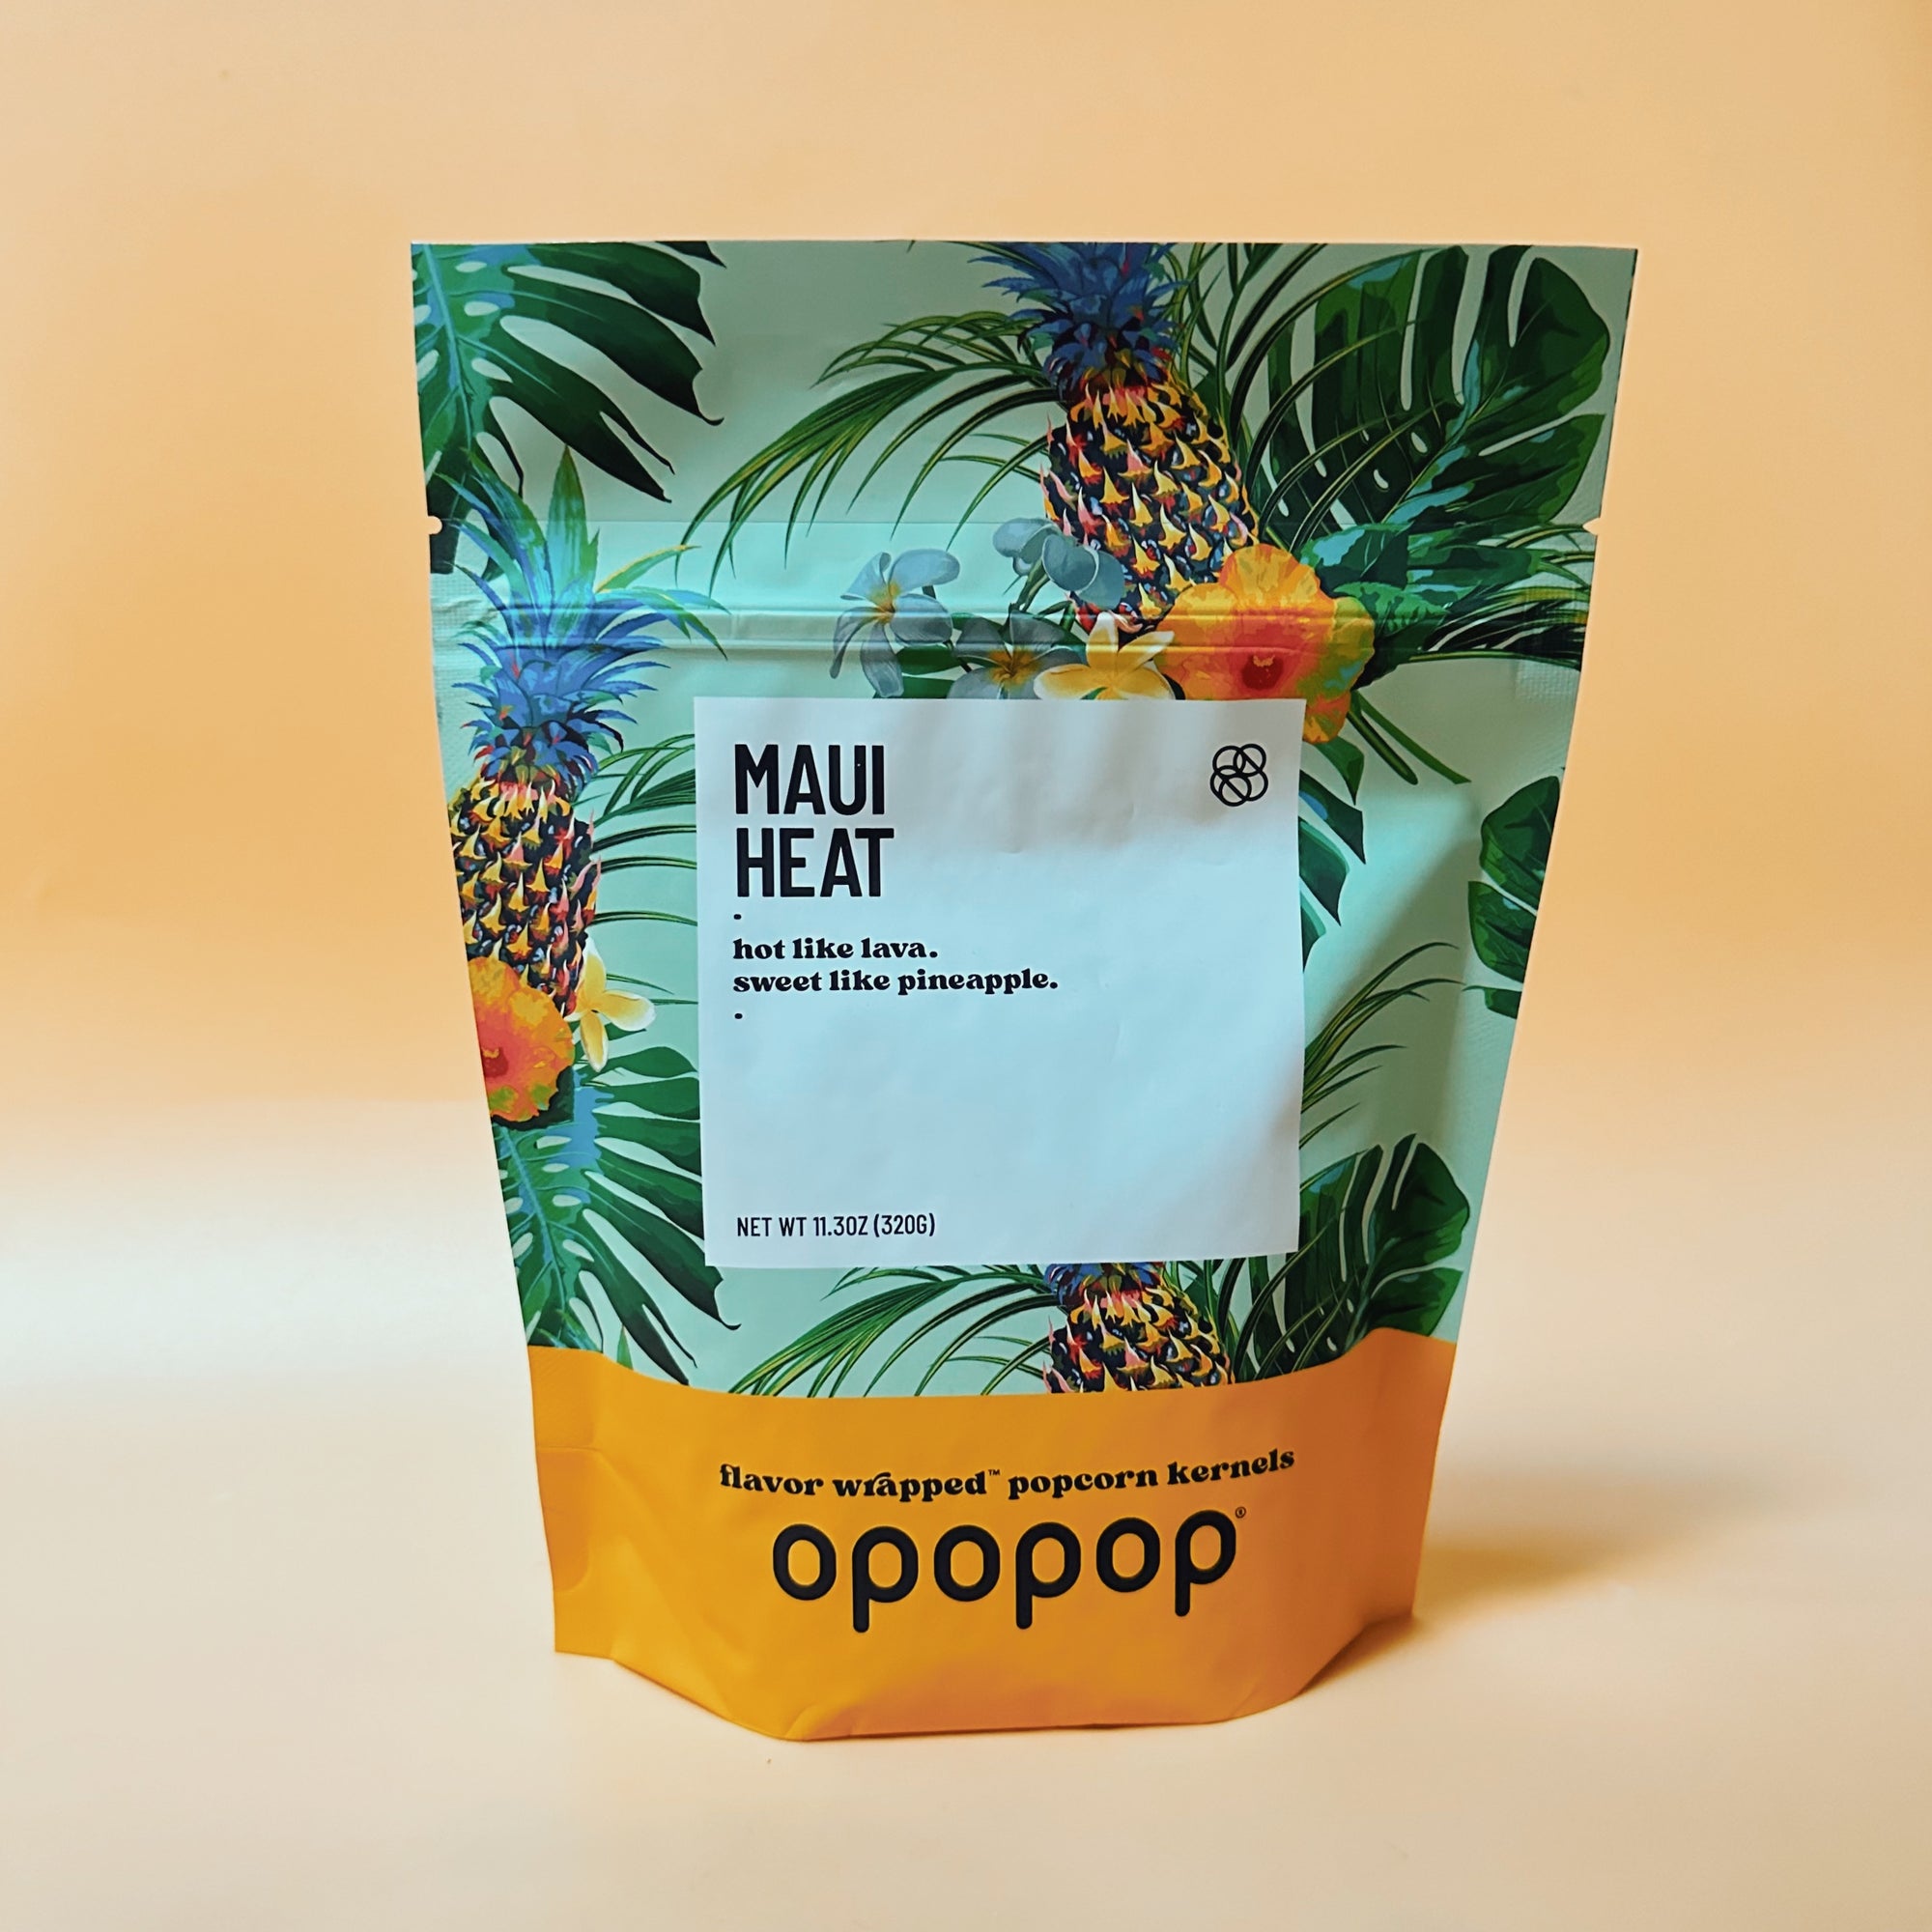 Maui Heat Popcorn Kernels